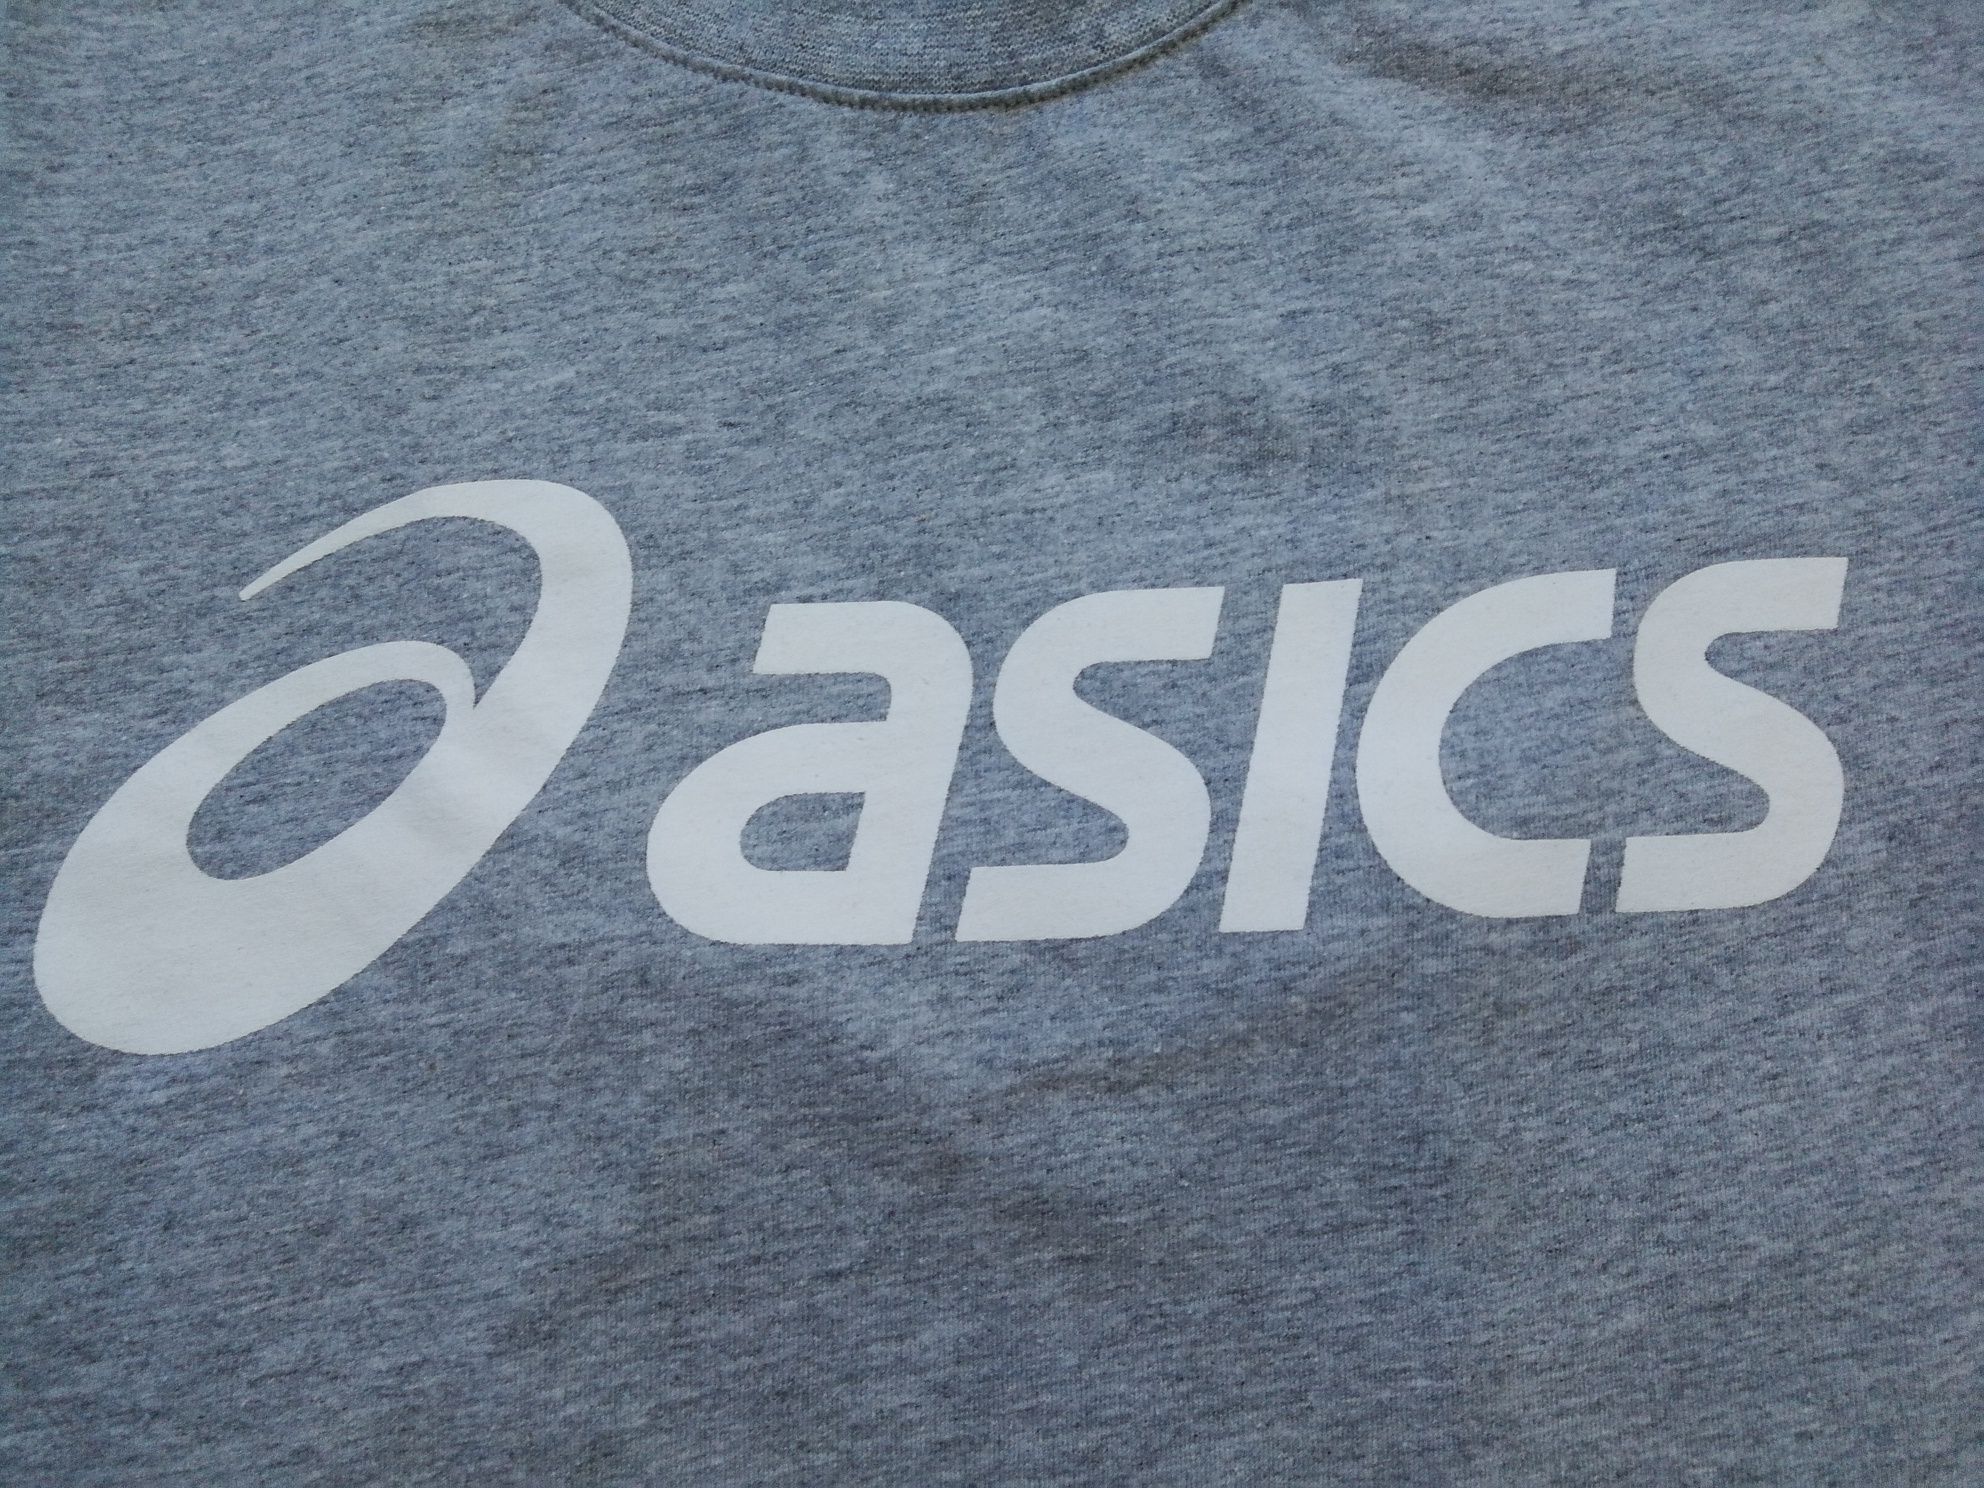 T-Shirt Asics...